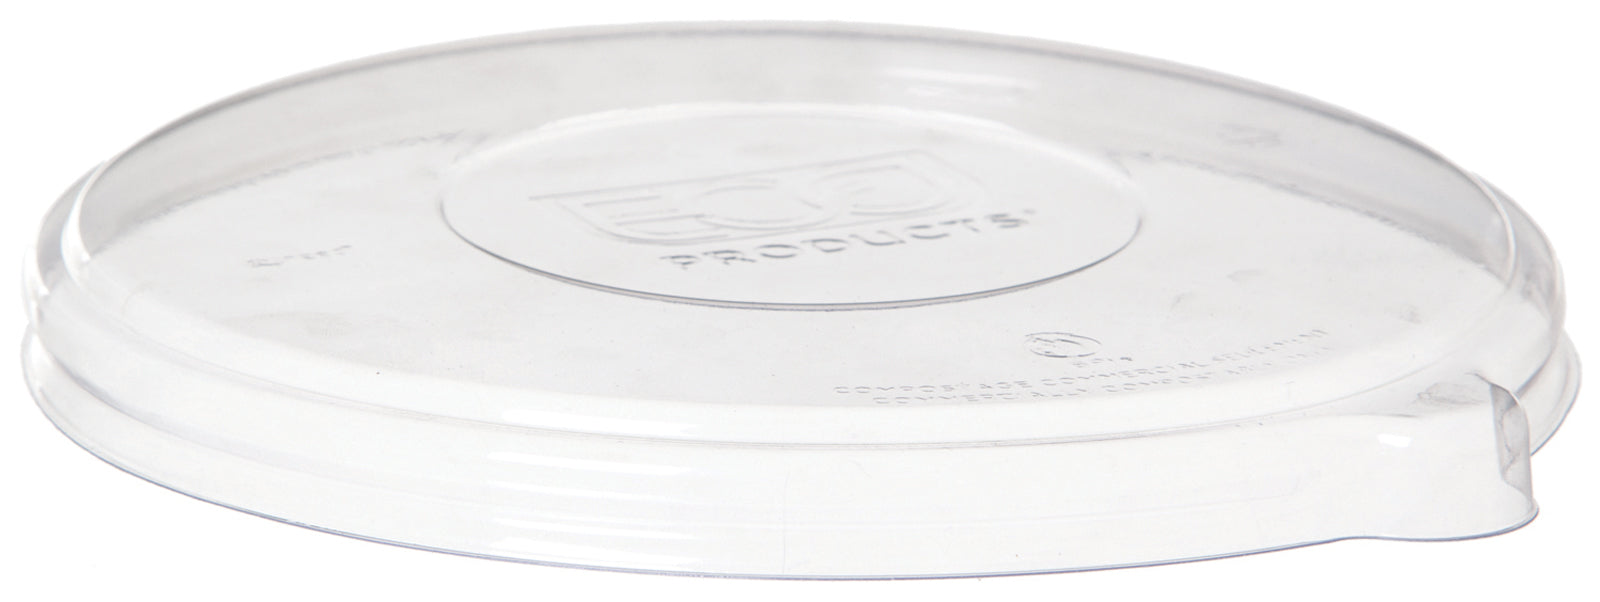 PLA degradable lid for 710 and 940 ml plates - 50 pcs/cs